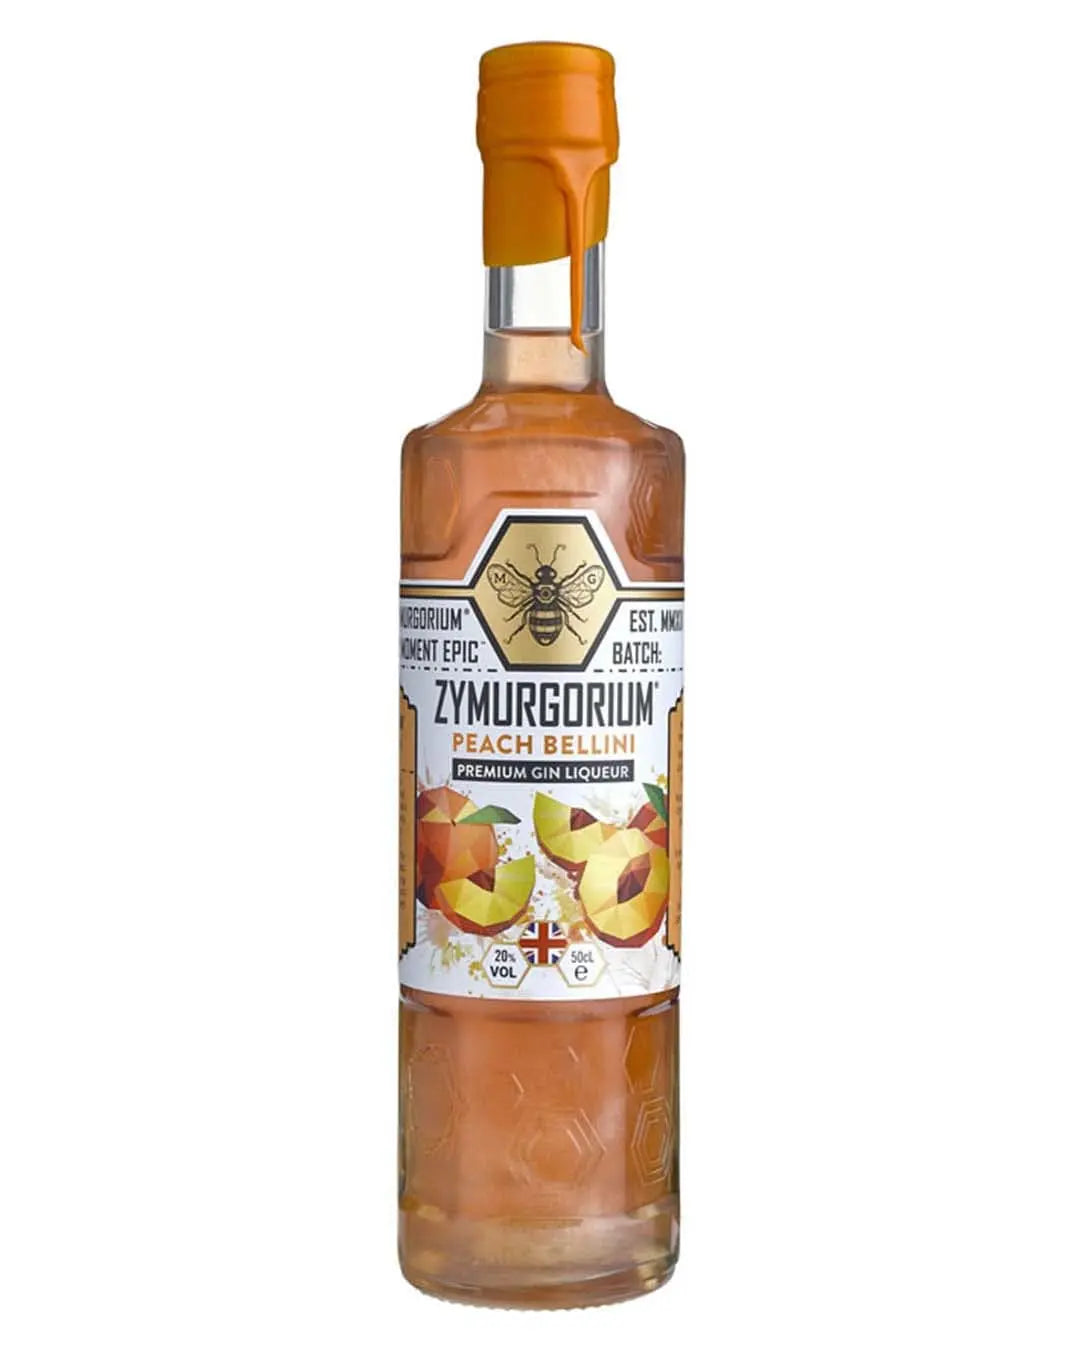 Zymurgorium Peach Bellini Gin Based Liqueur, 50 cl Gin